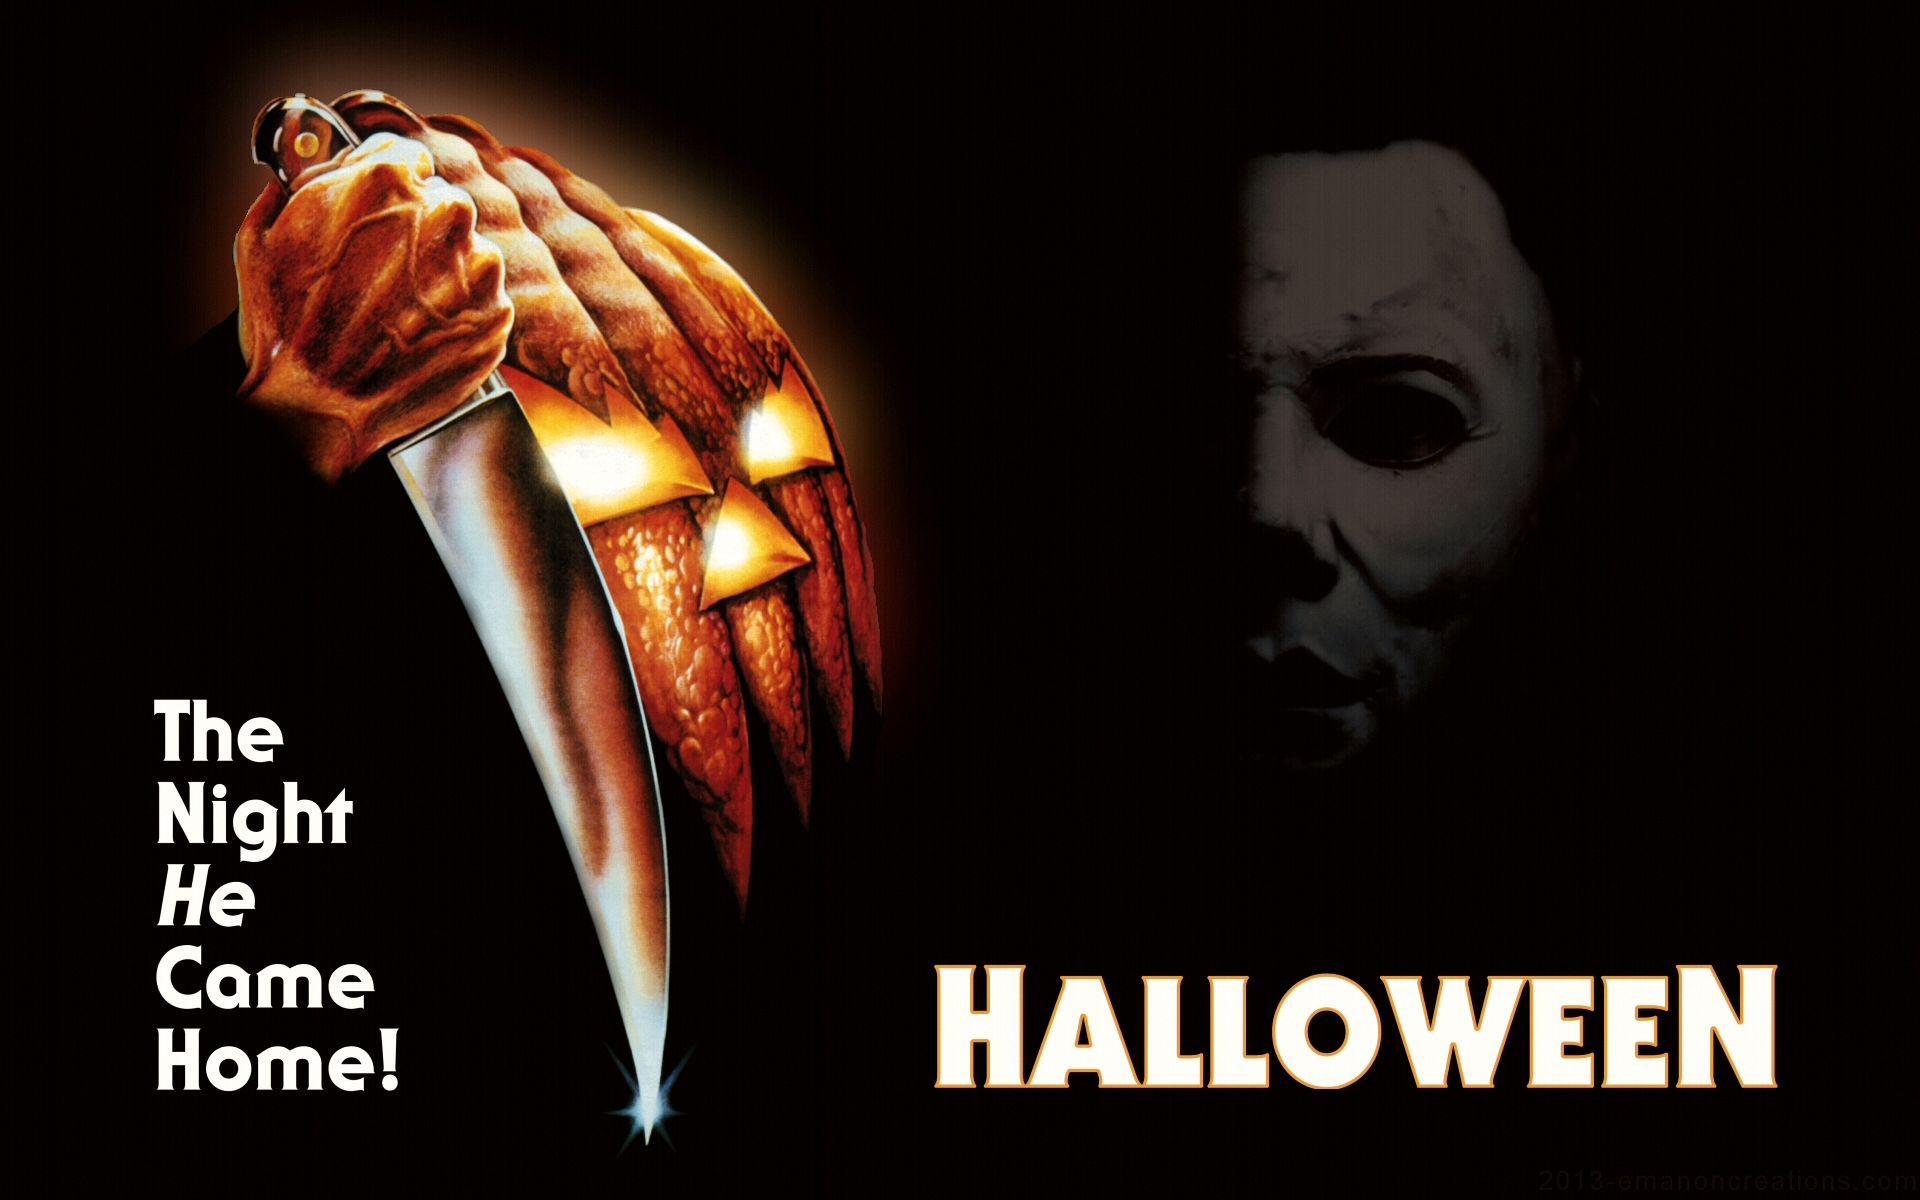 Halloween Movie.com. Free HD Wallpaper. Halloween movies, Horror movies, Halloween wallpaper